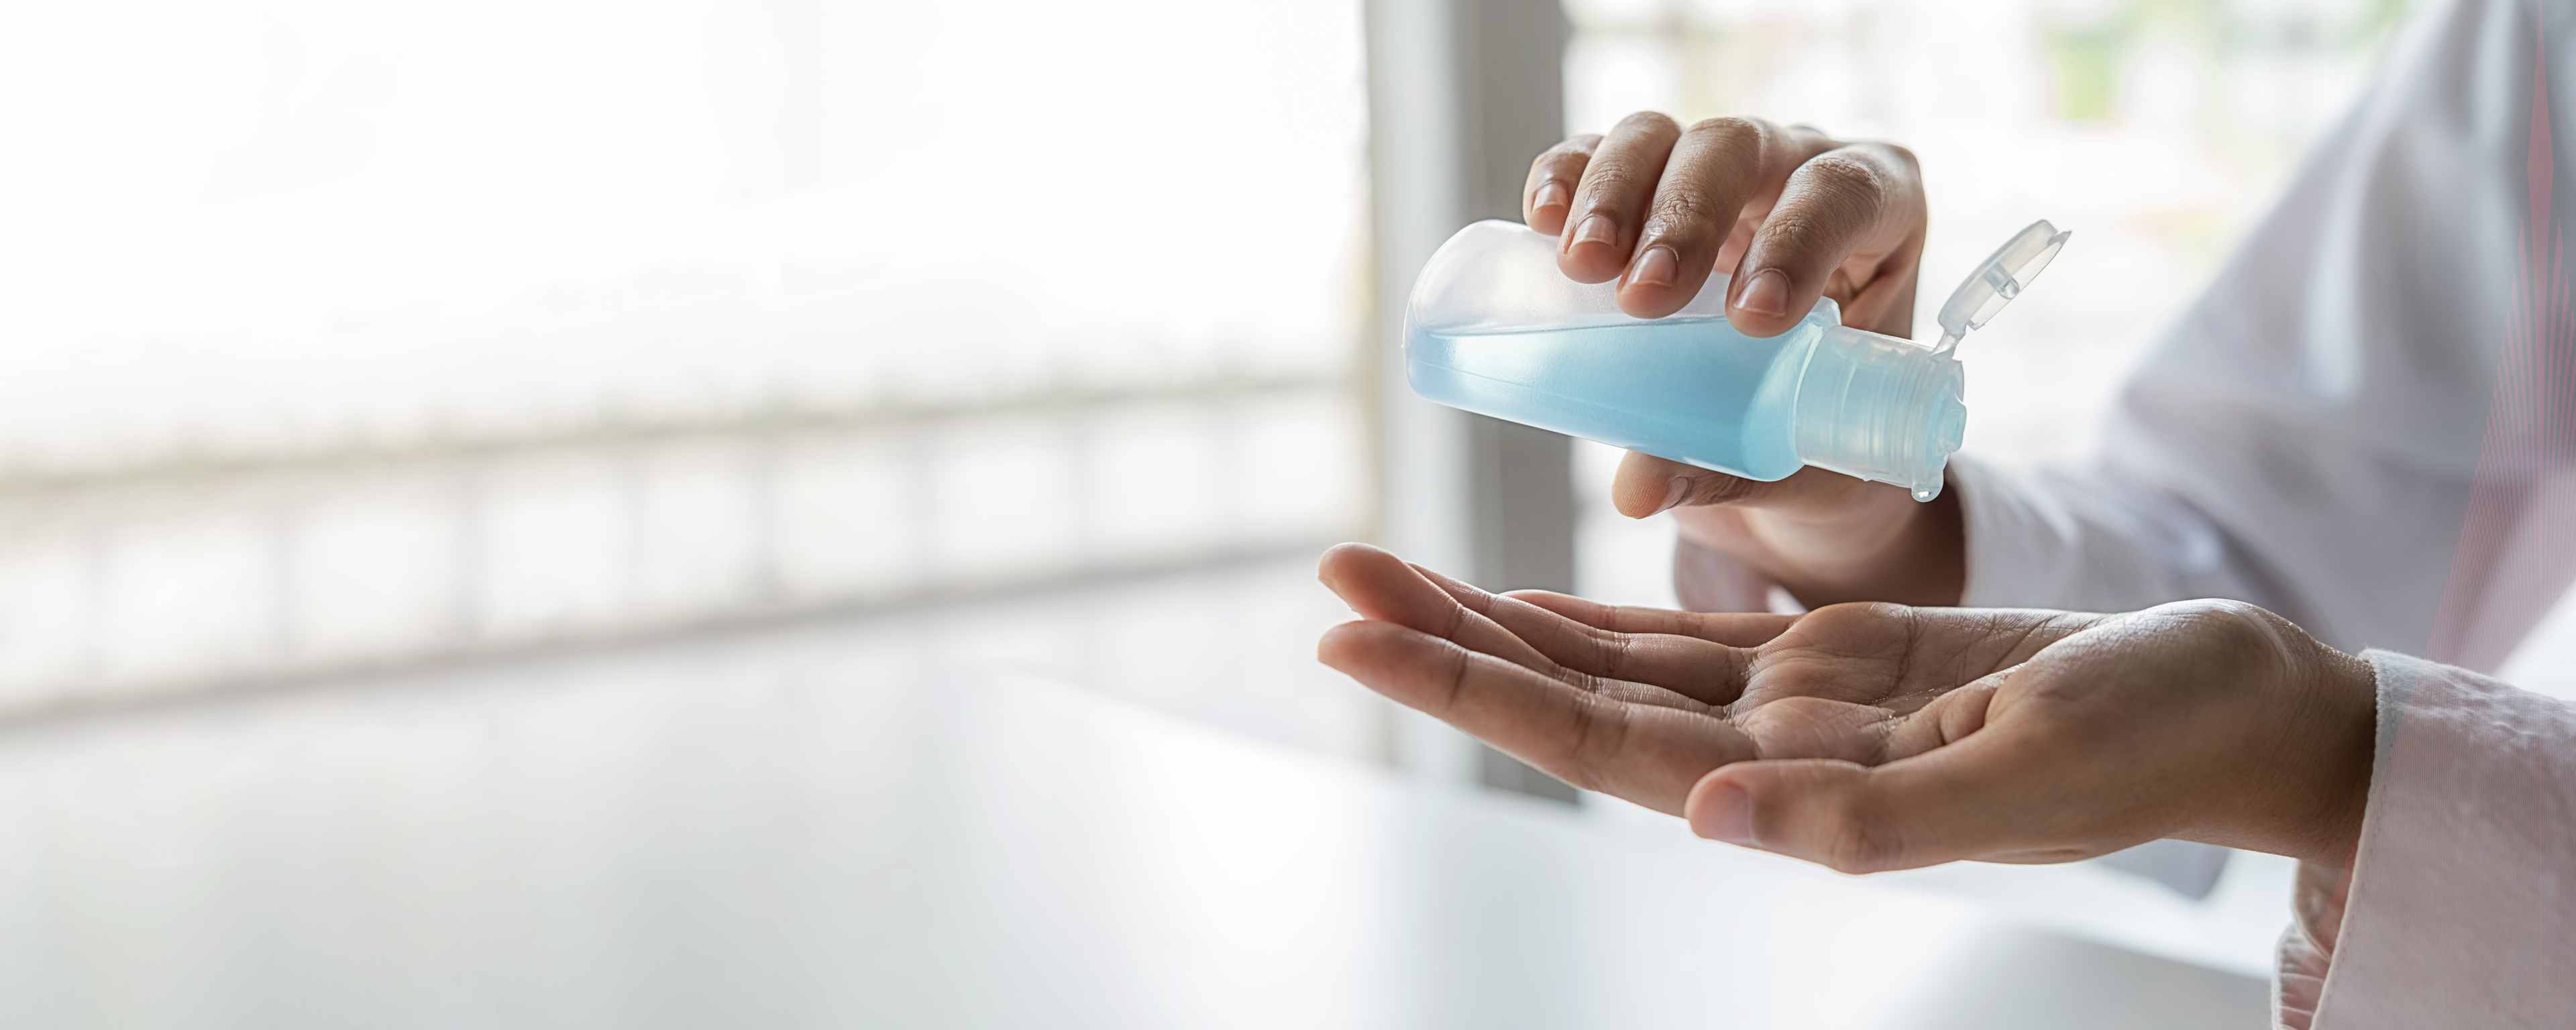 regular hand sanitiser for safe work environments - hand sanitizer - protection